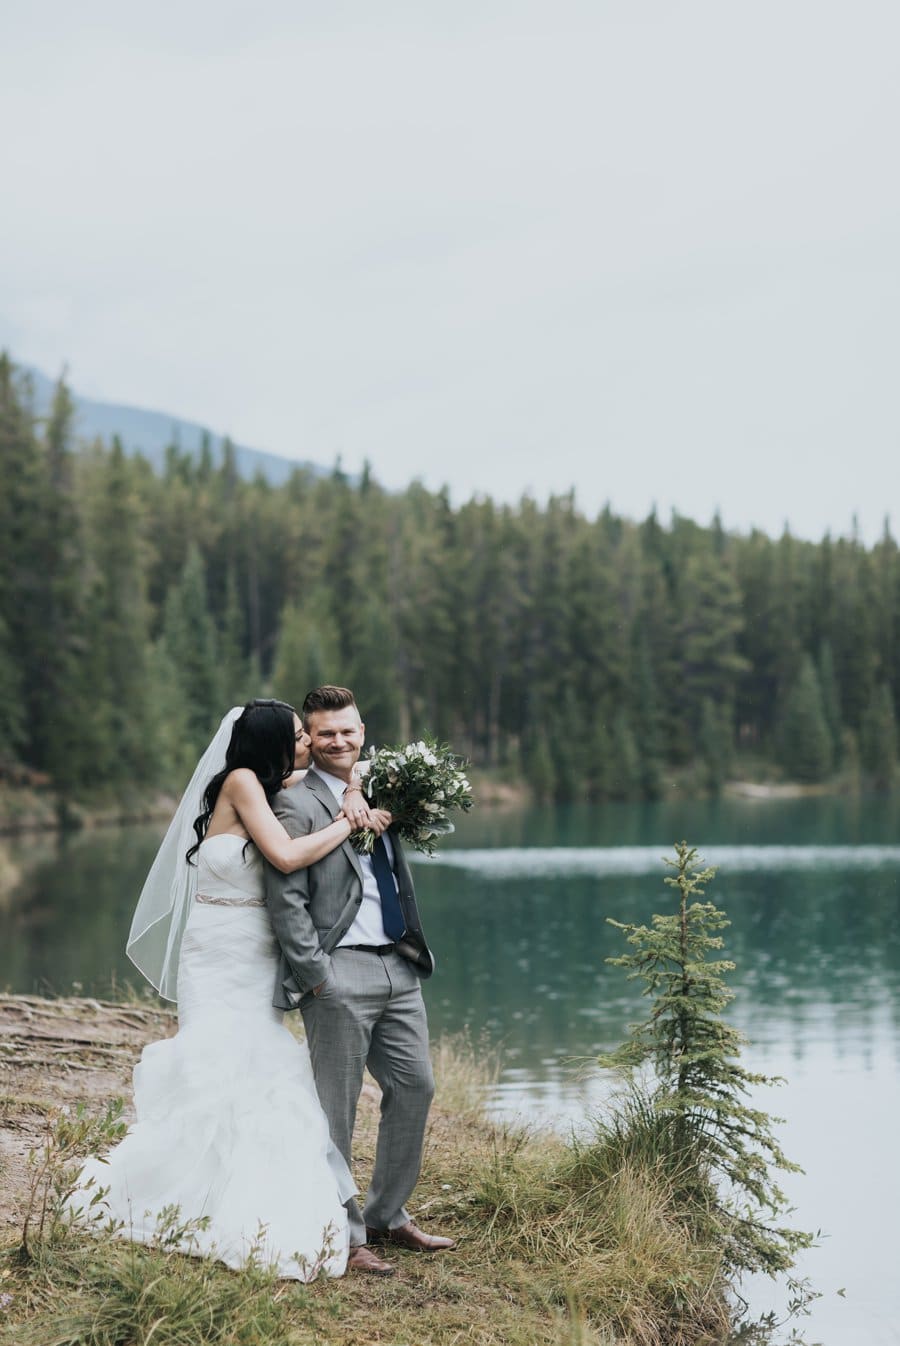 Two Jack Lake South wedding photos